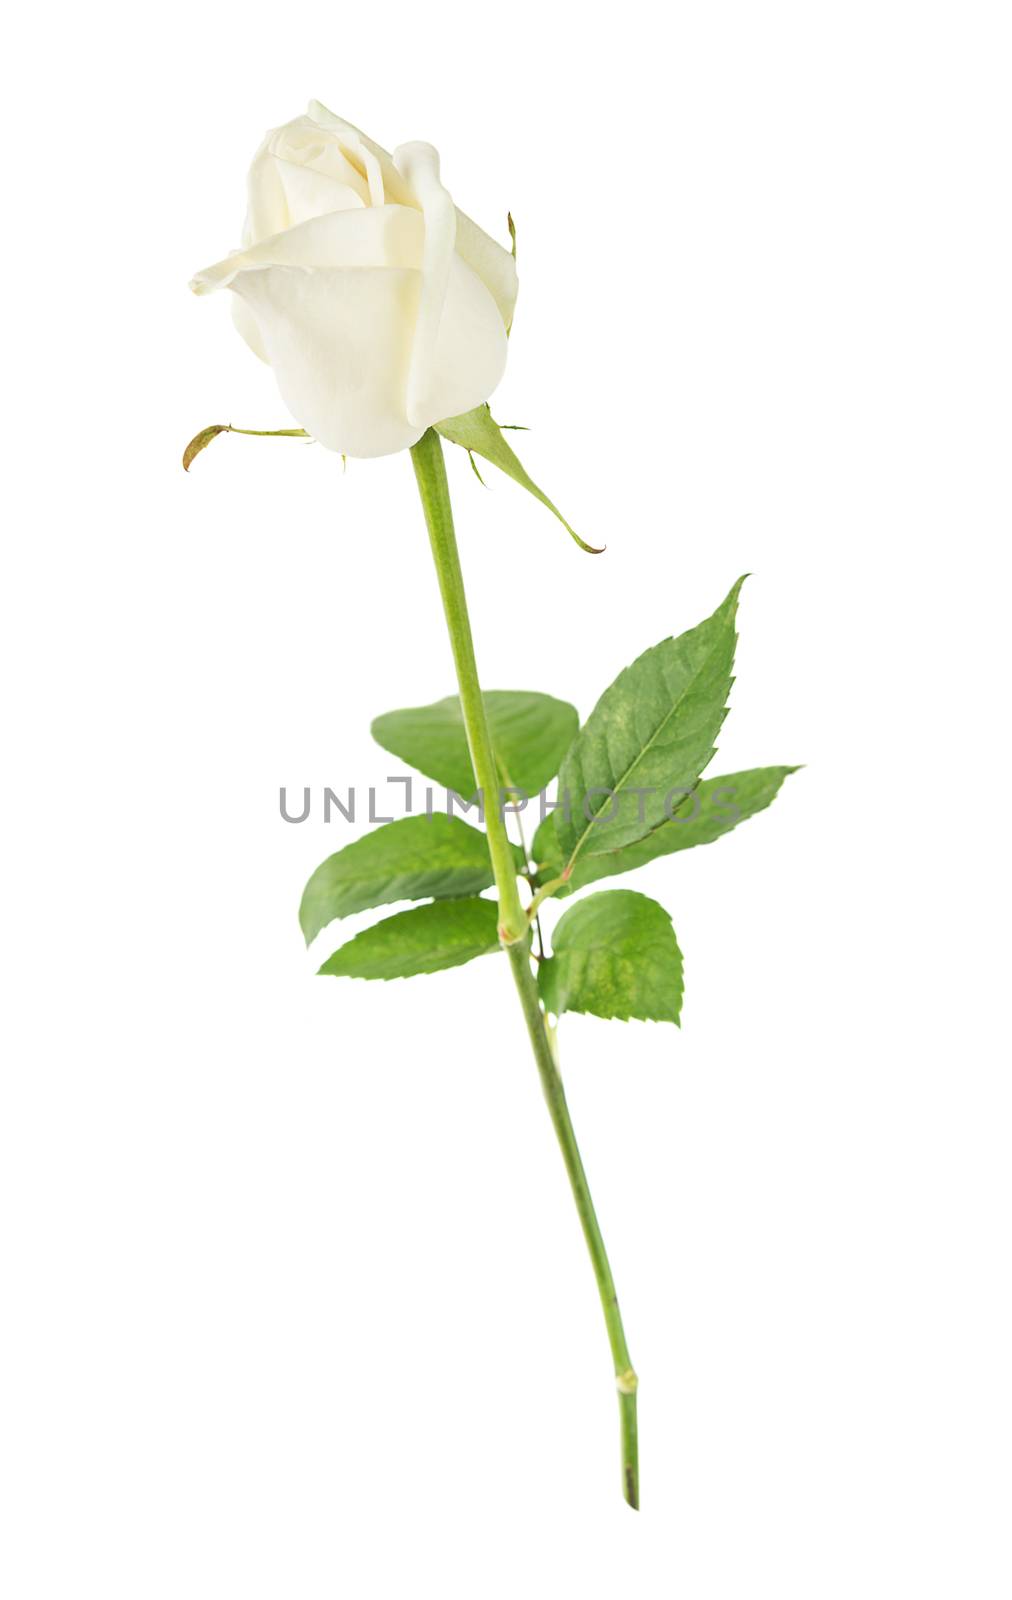 White rose on a white background by Epitavi